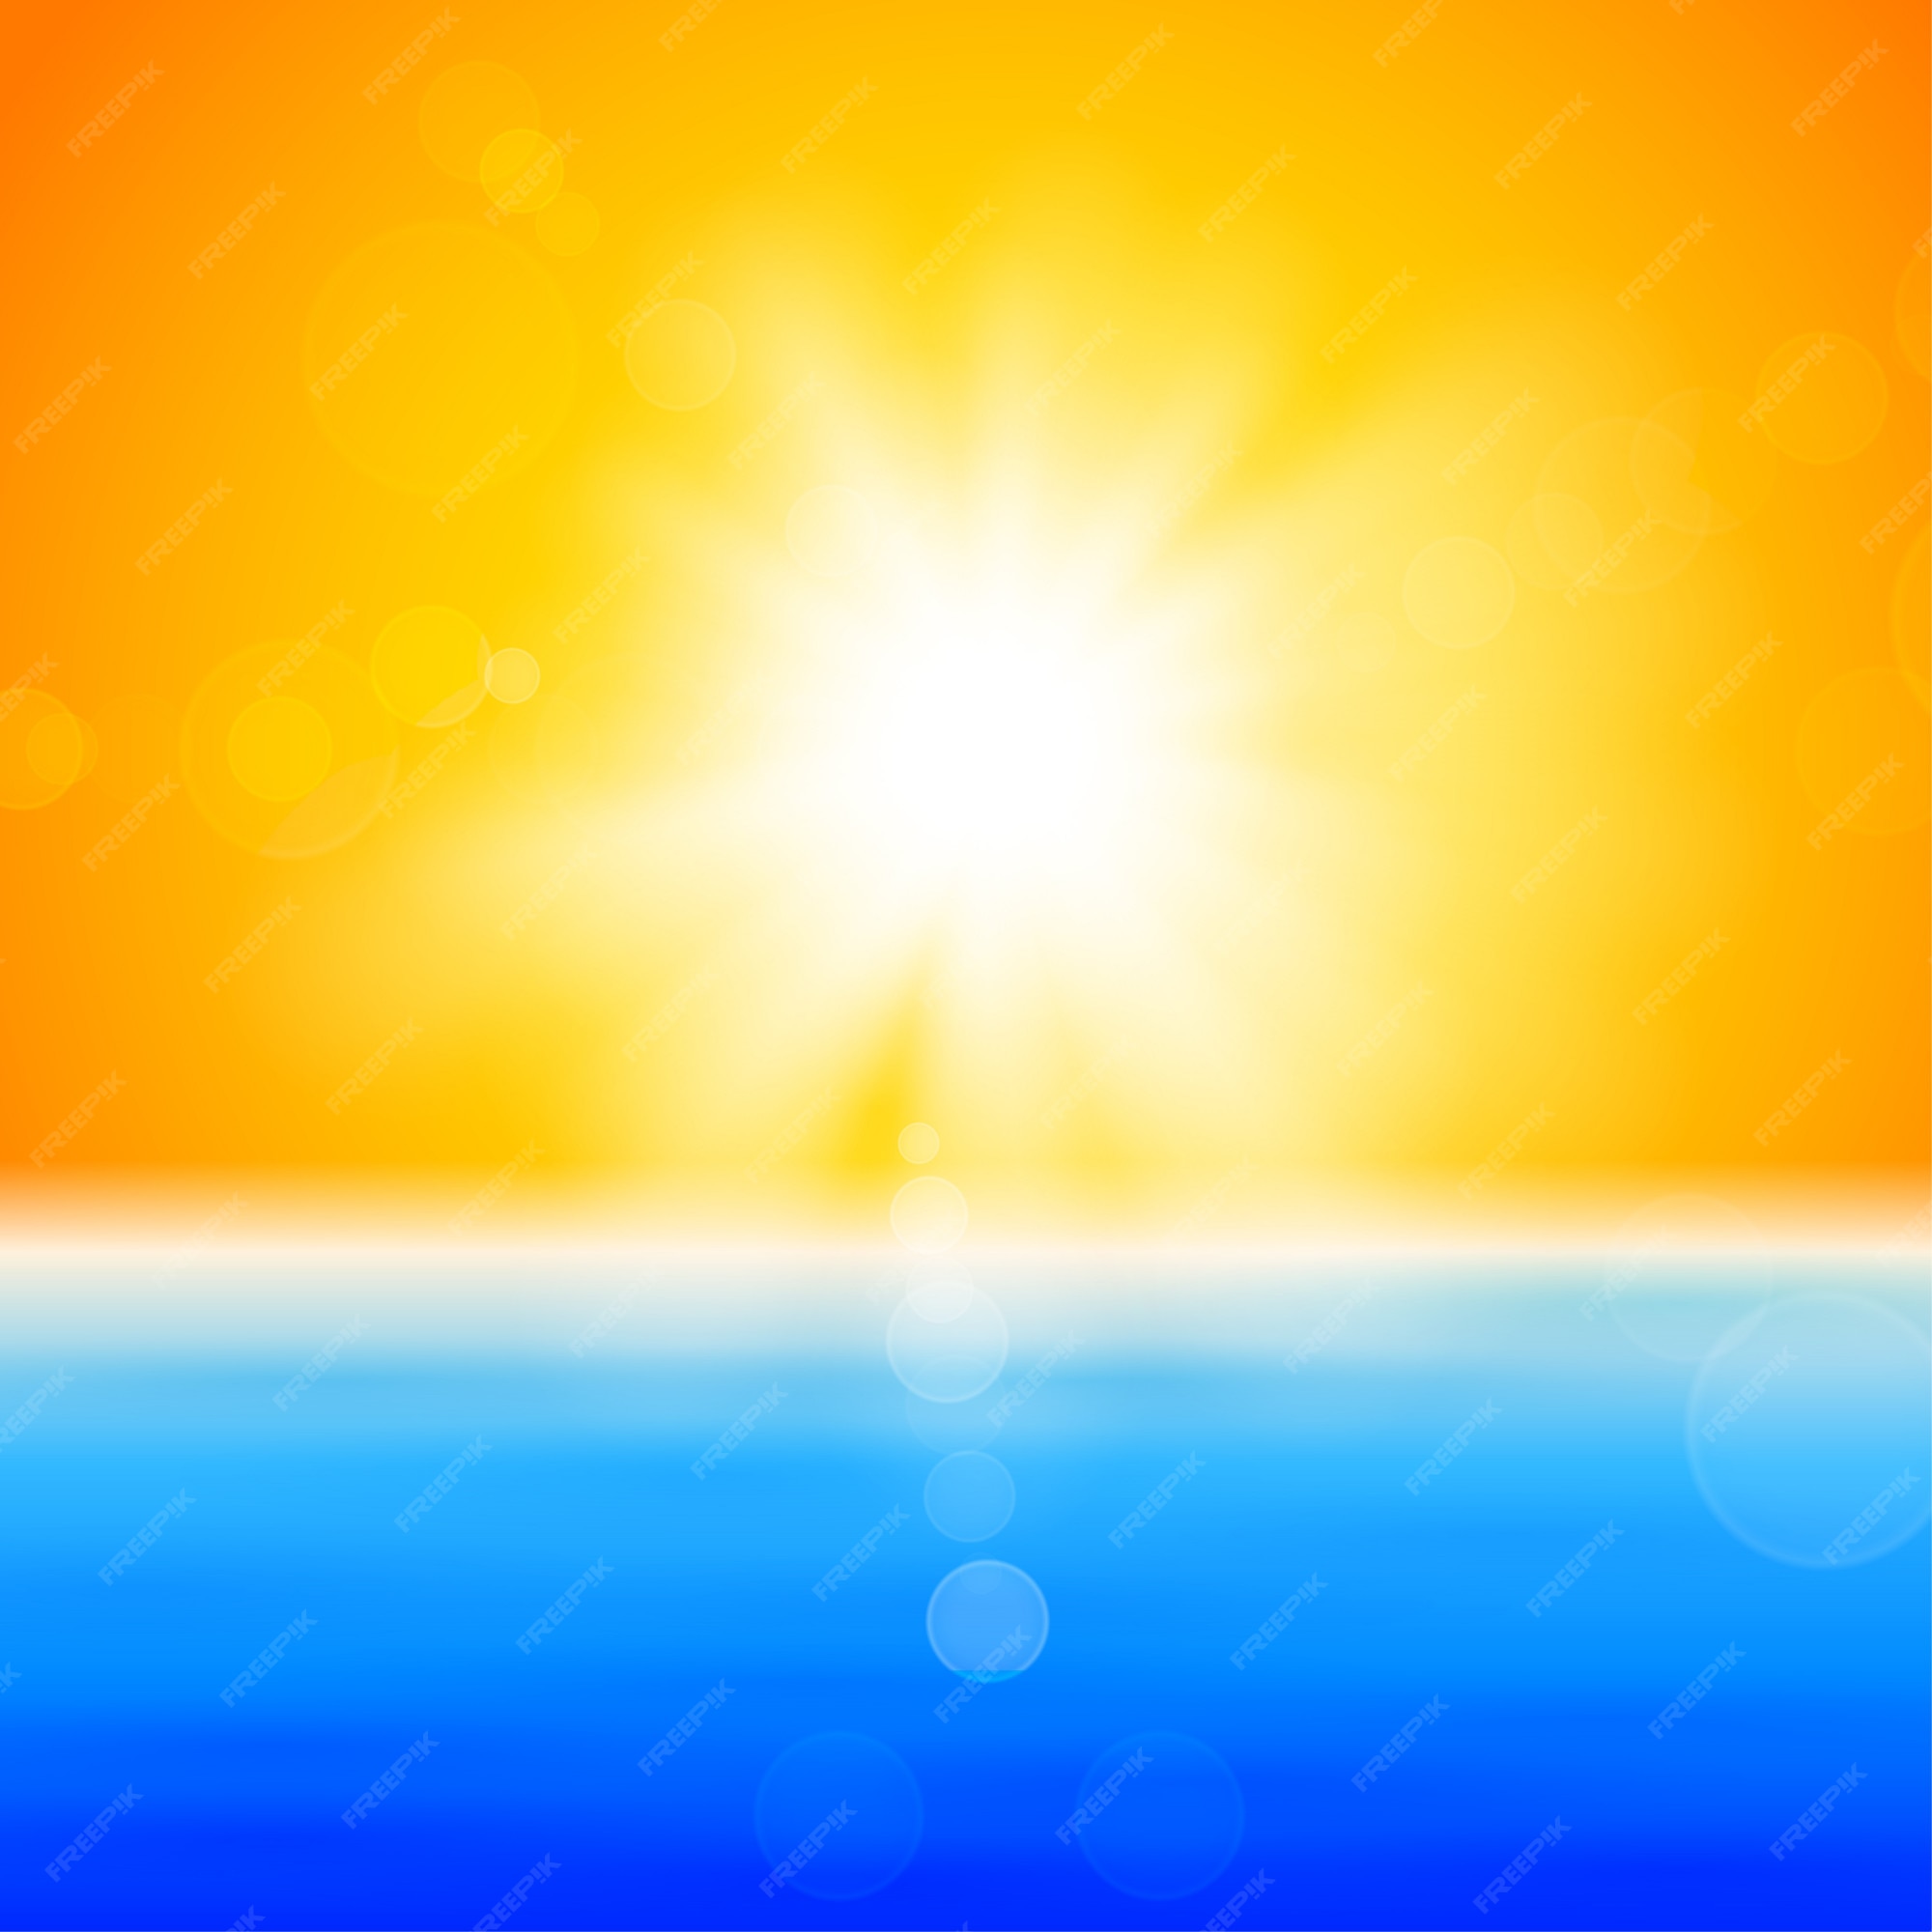 Summer Sun Background Images - Free Download on Freepik